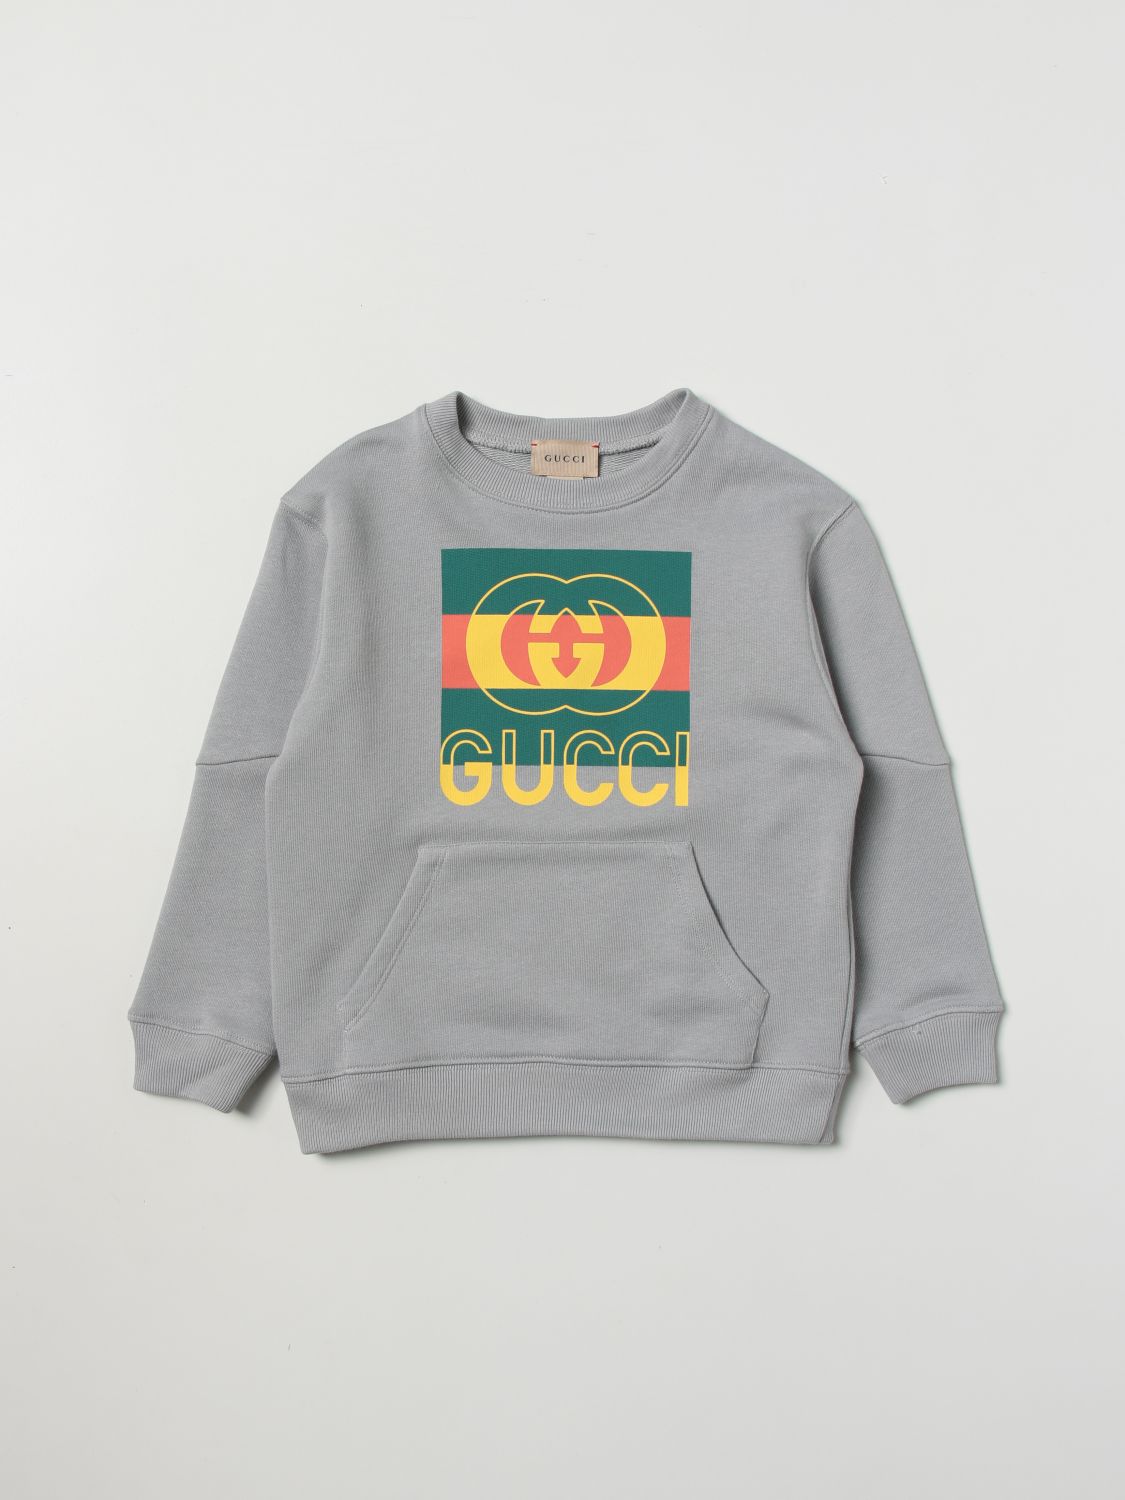 GUCCI: crewneck sweatshirt with GG logo - Grey | Gucci sweater online on GIGLIO.COM